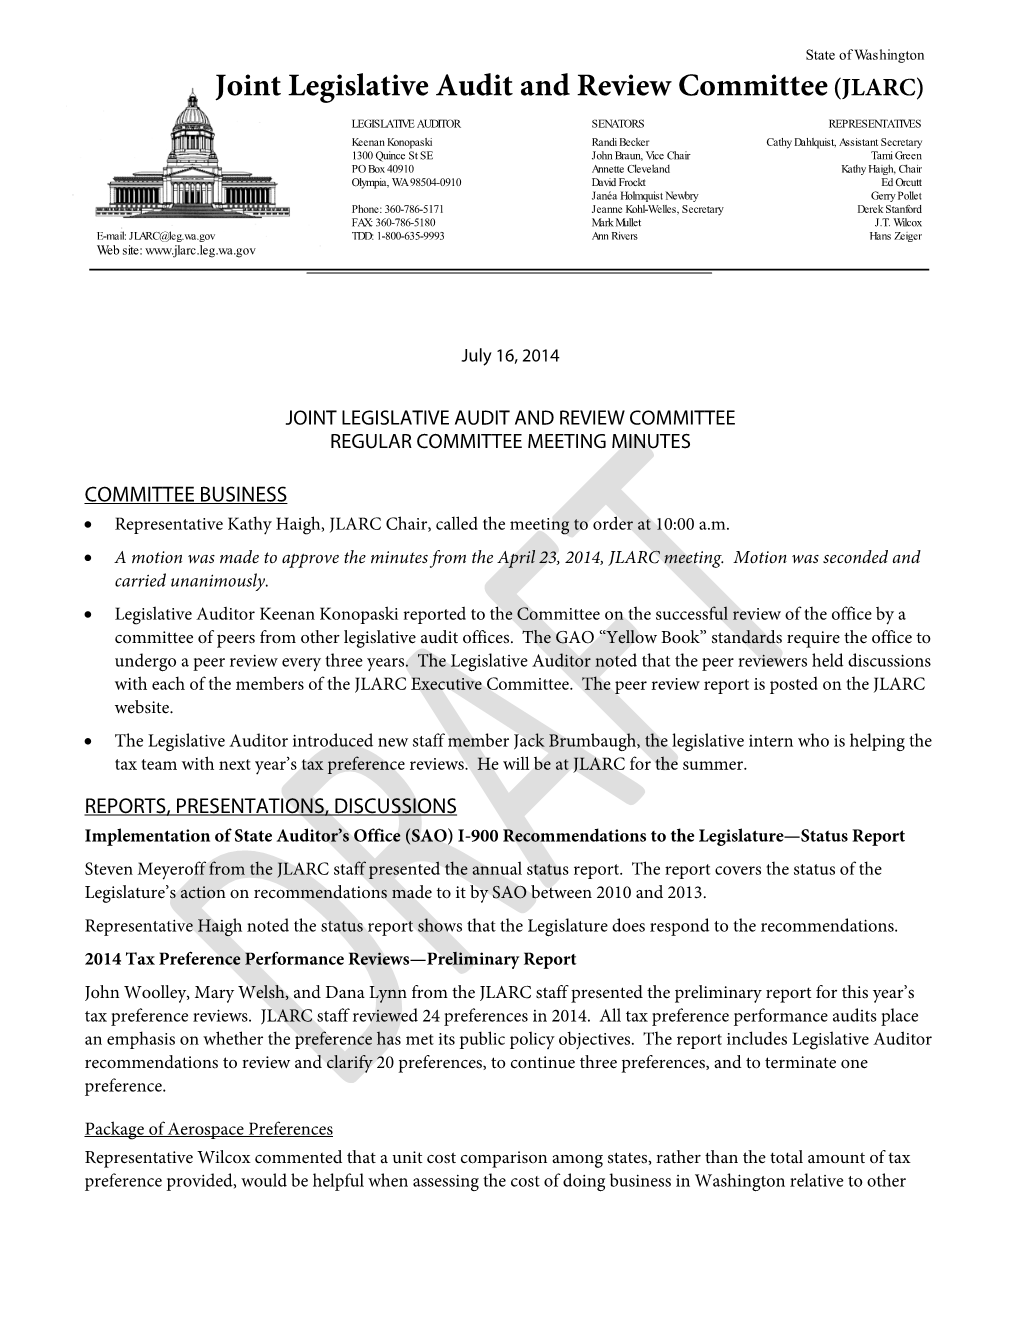 July 16, 2014, JLARC Meeting Minutes